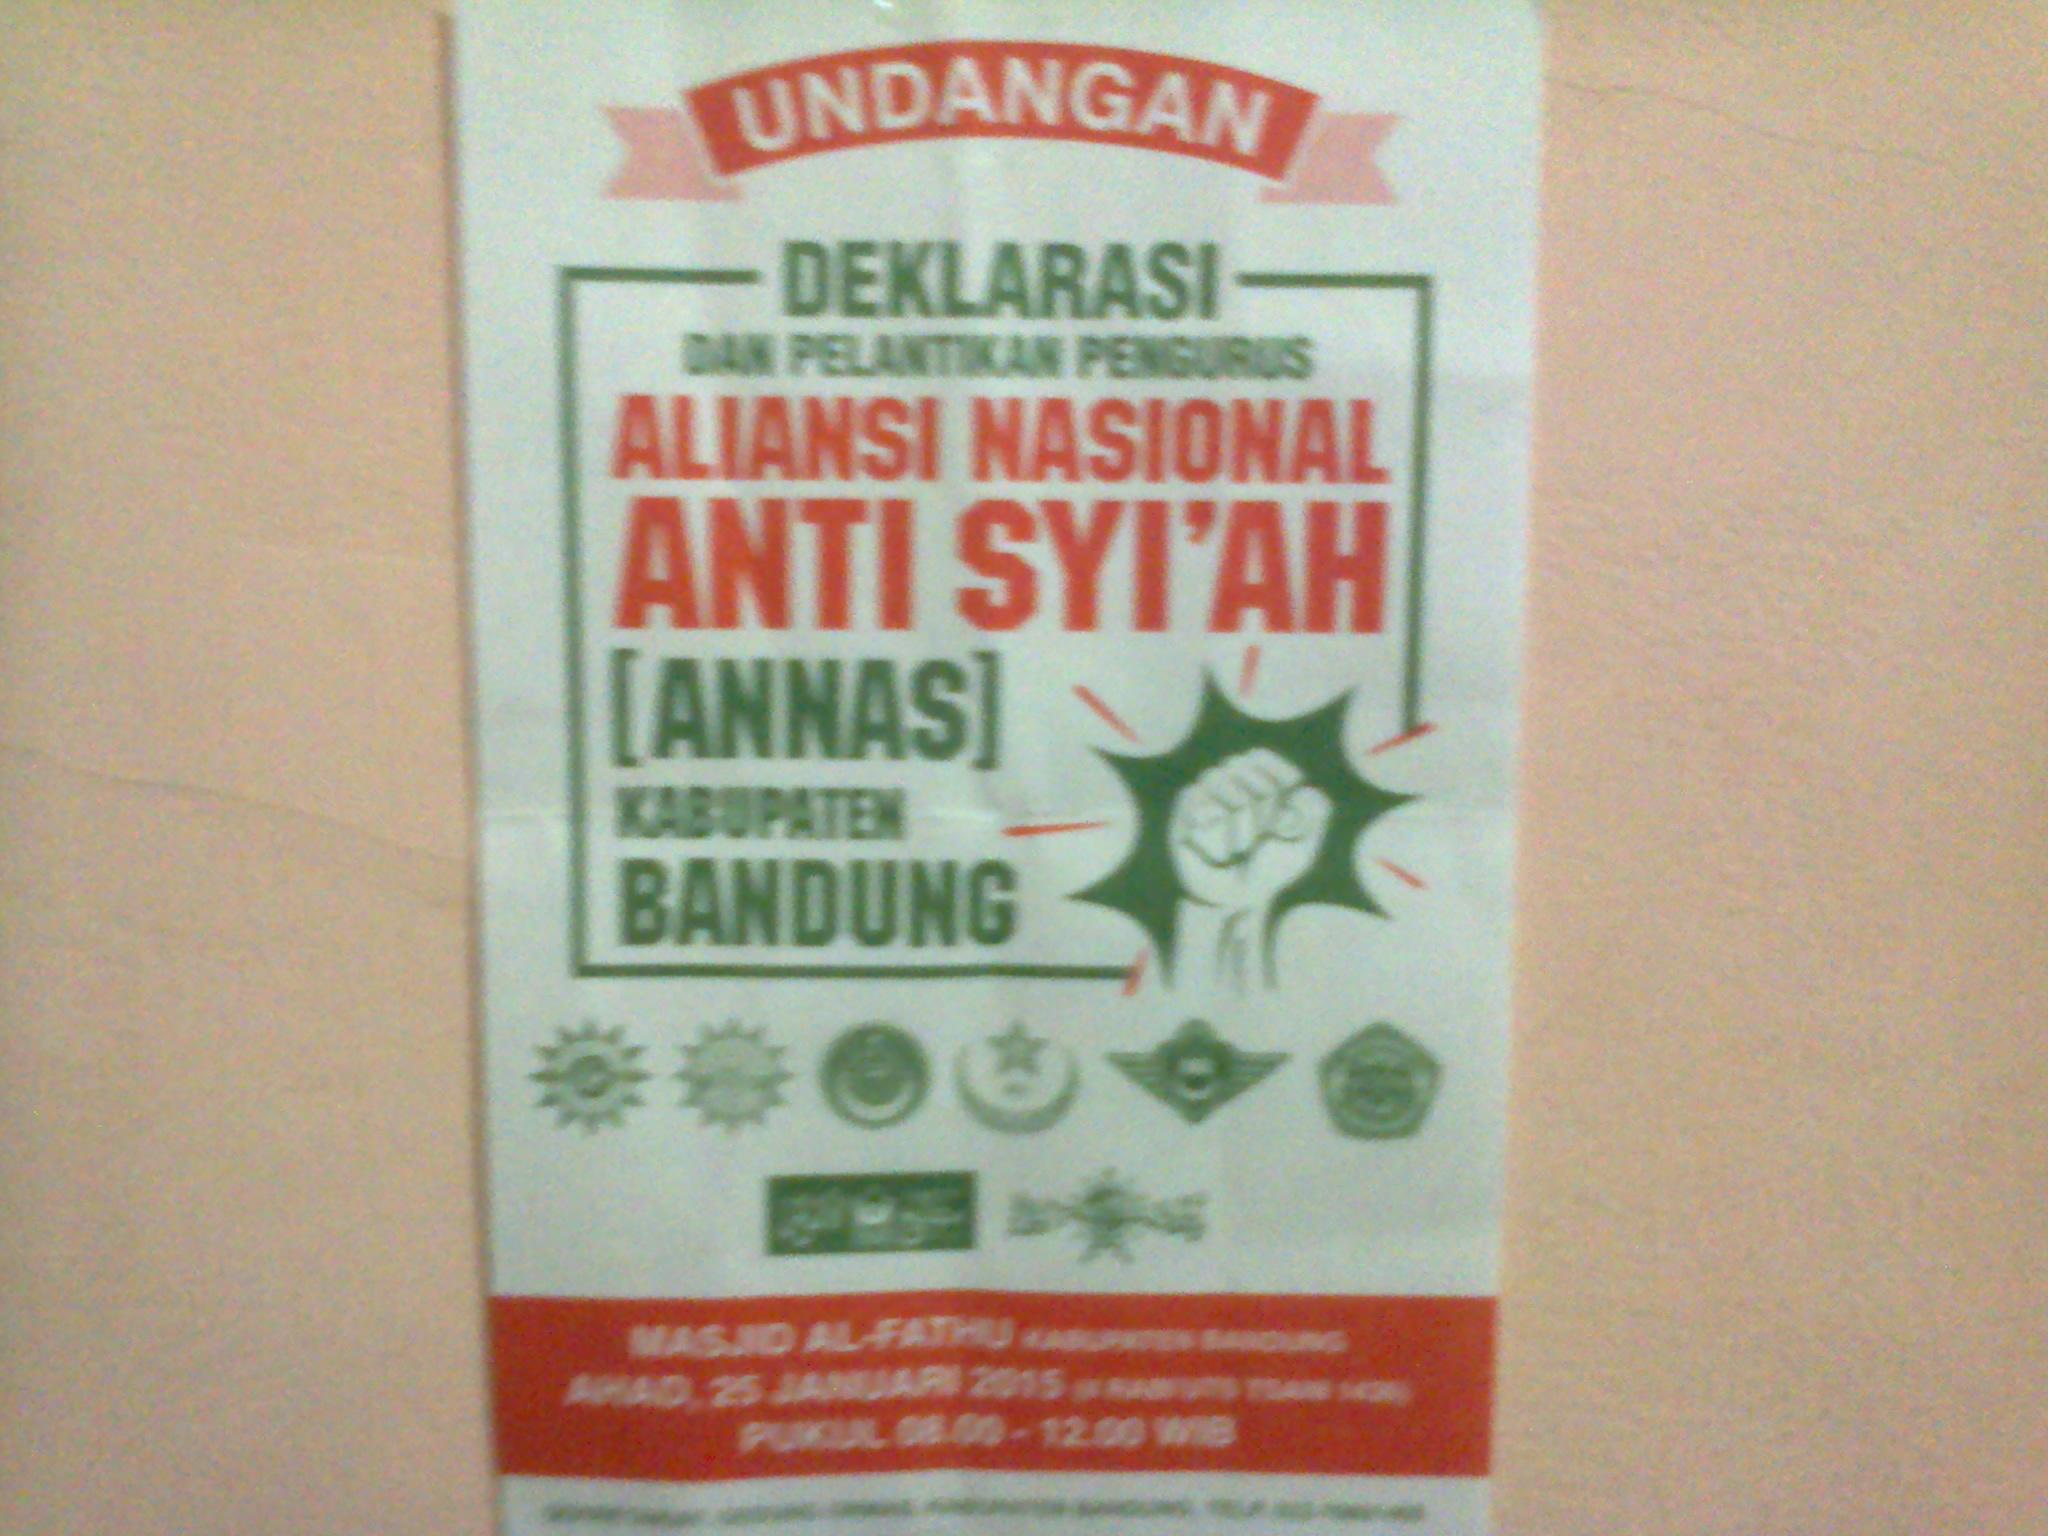 Hadirilah! Deklarasi Anti-Syi'ah Oleh ANNAS Kabupaten Bandung 